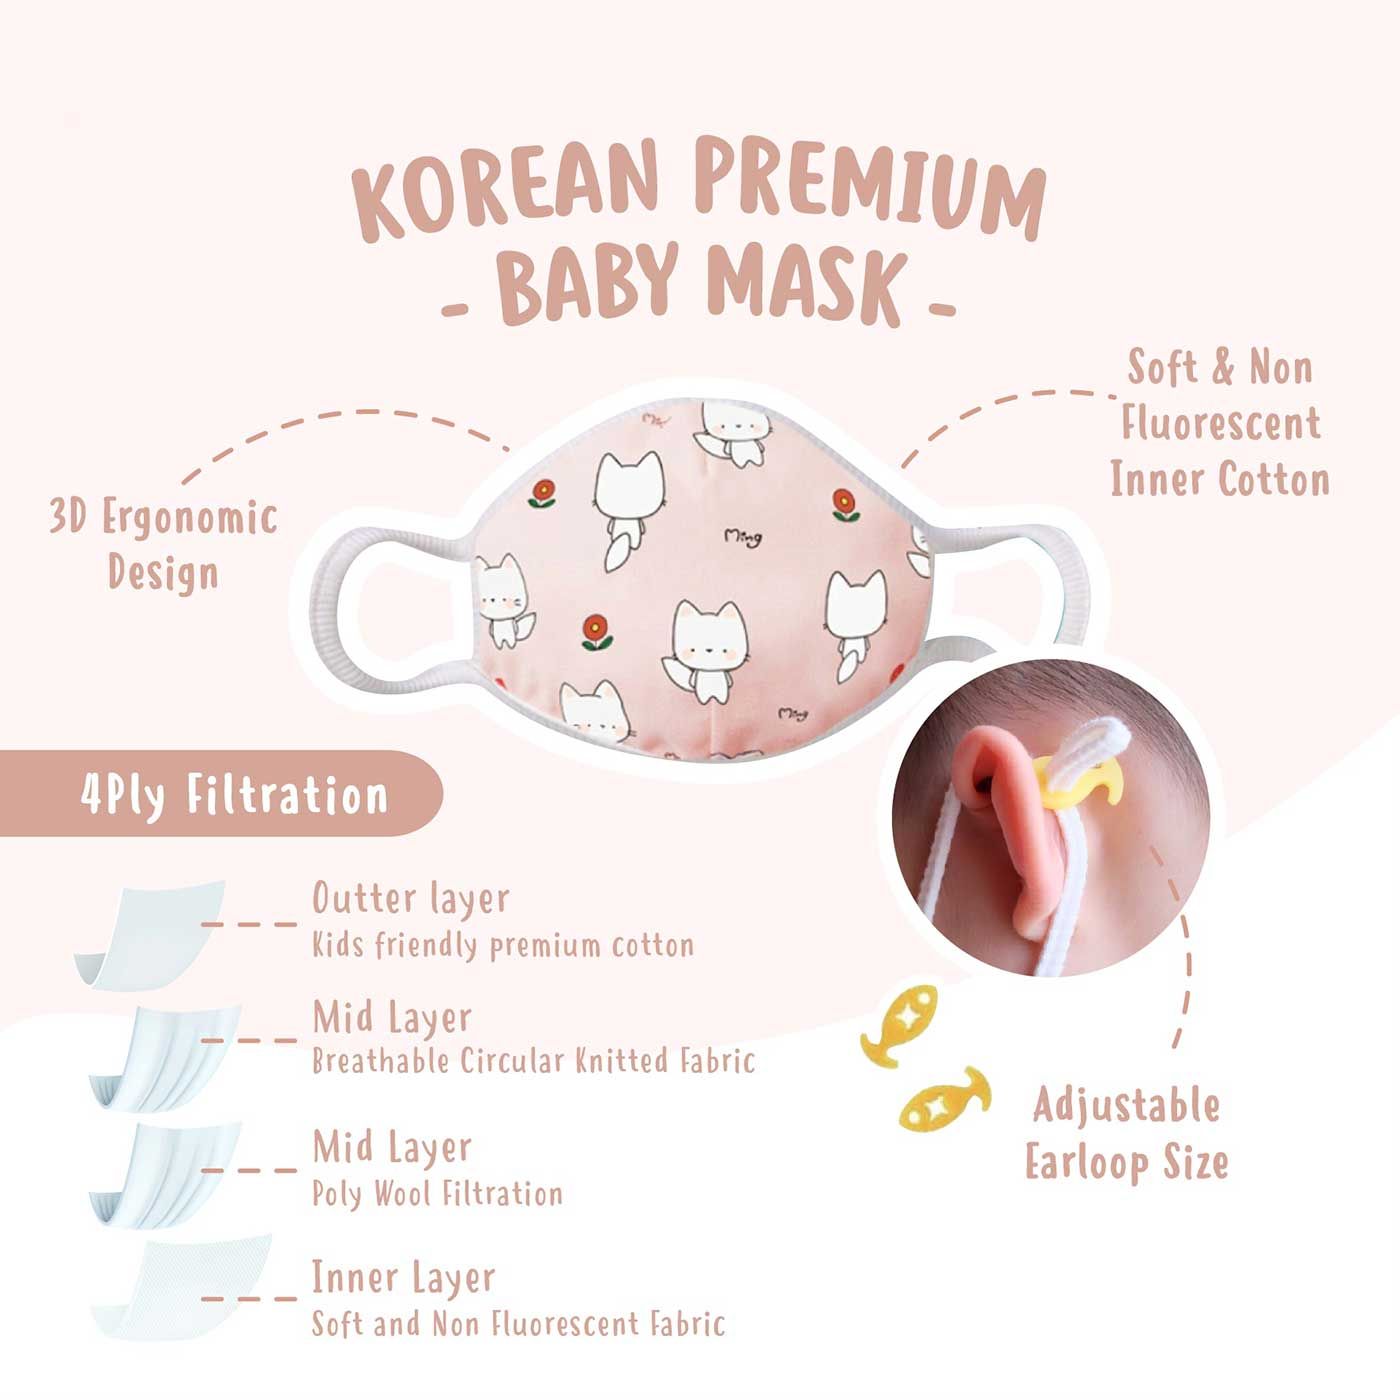 Down to Earth Korean Premium Baby Mask Hearts - 2